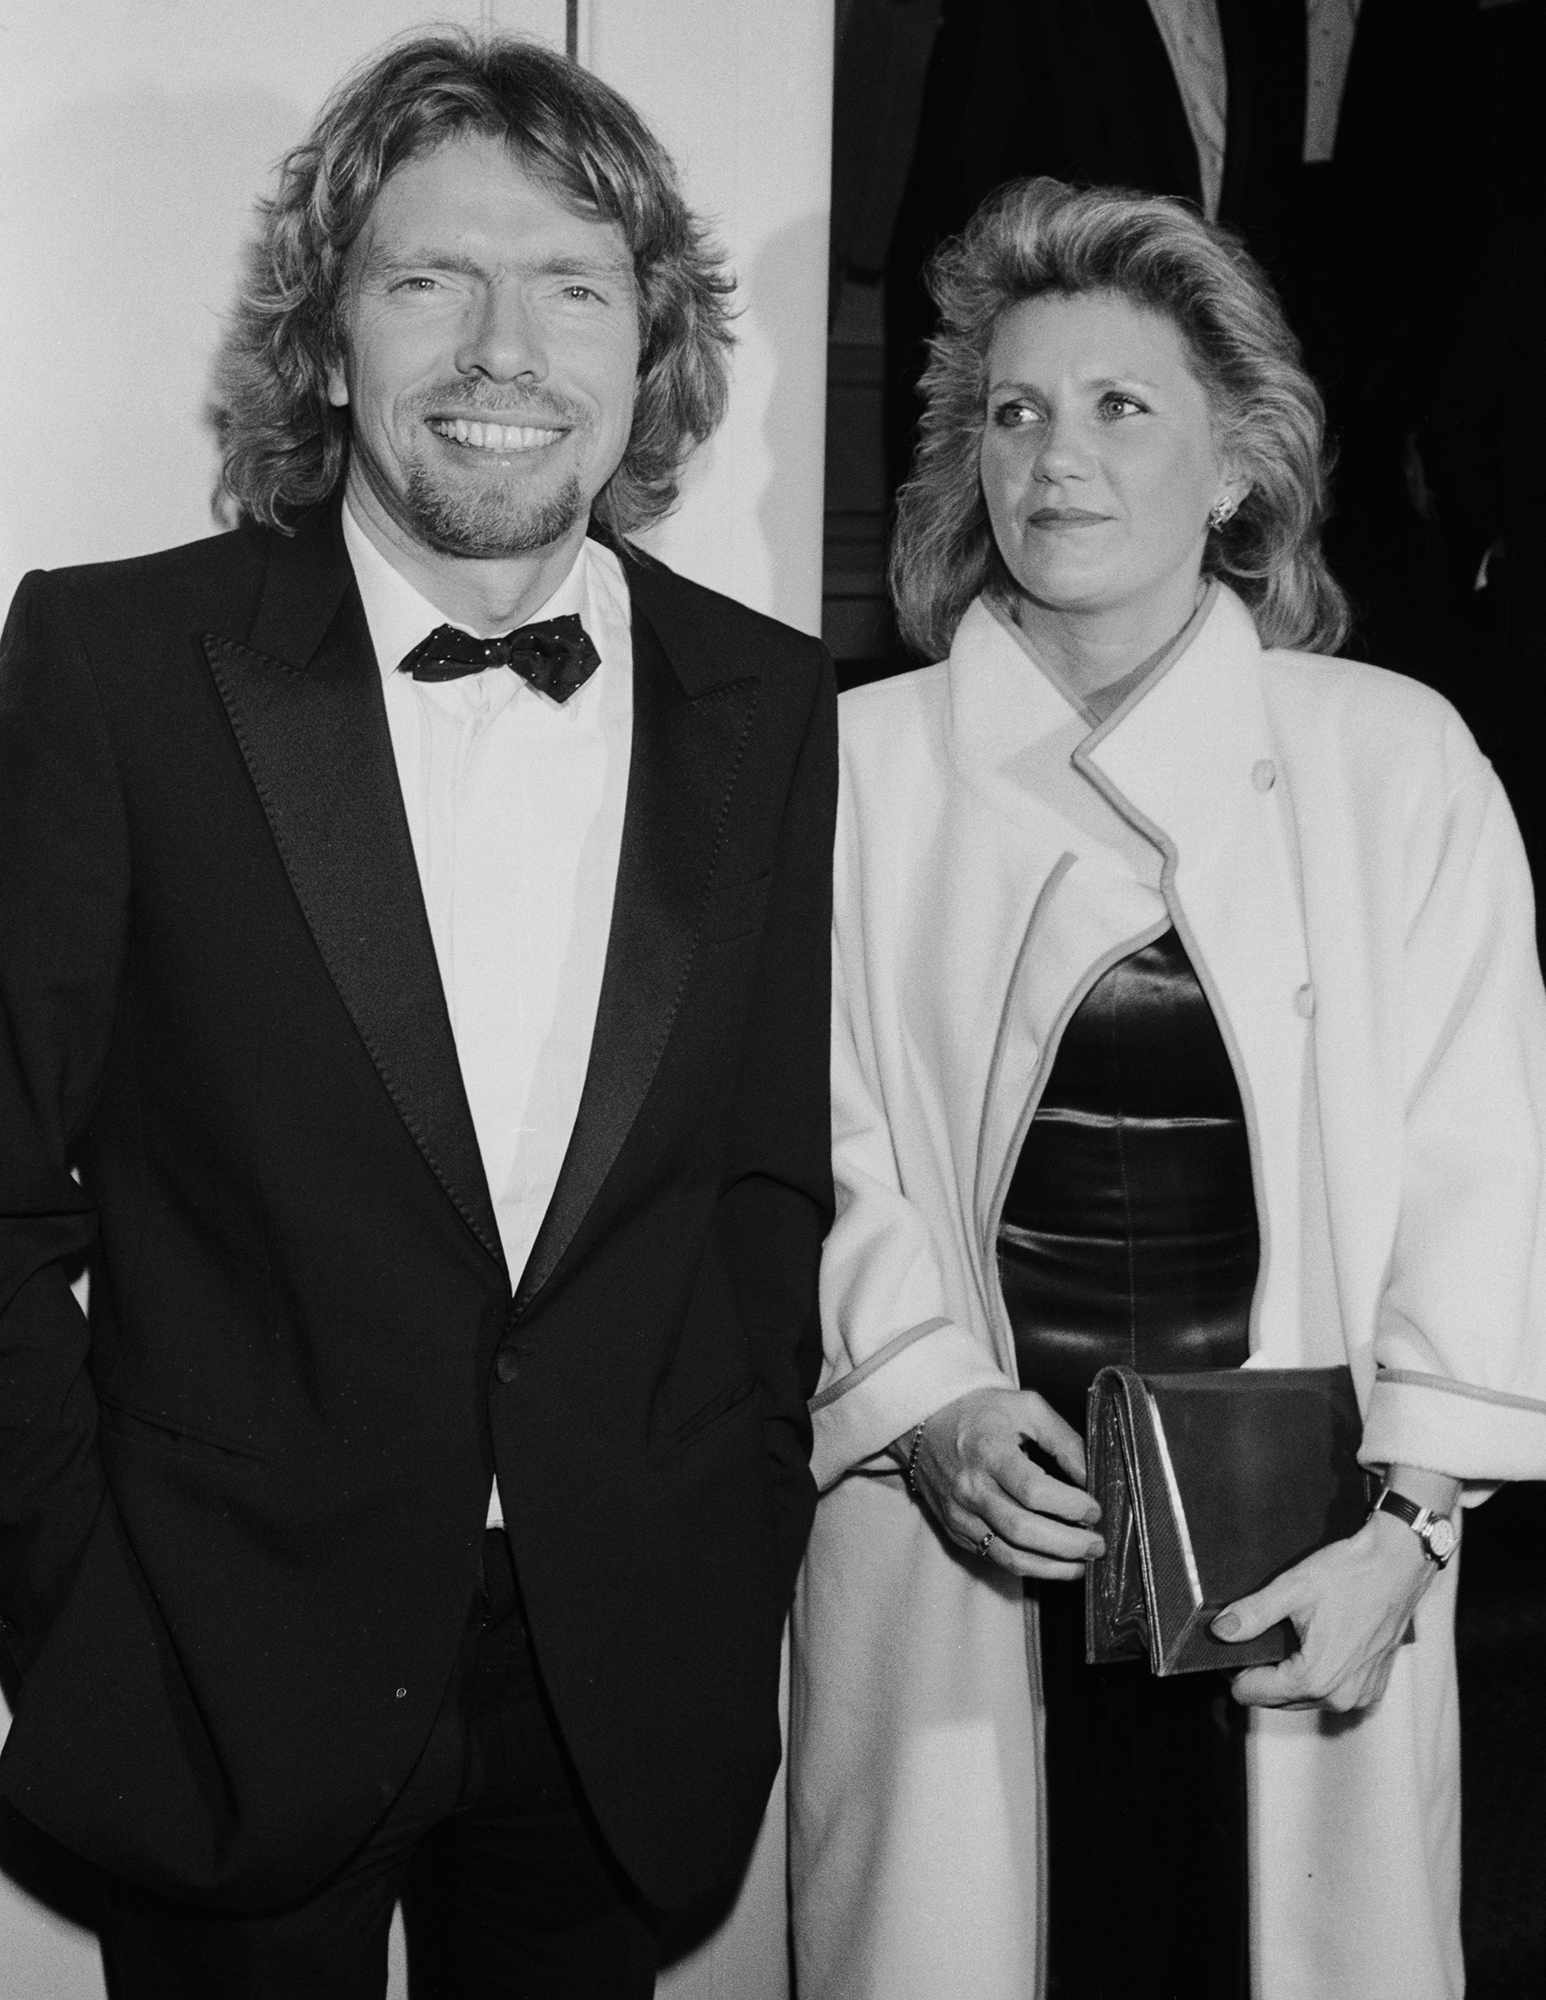 Richard Branson and Joan Templeman, circa 1985.